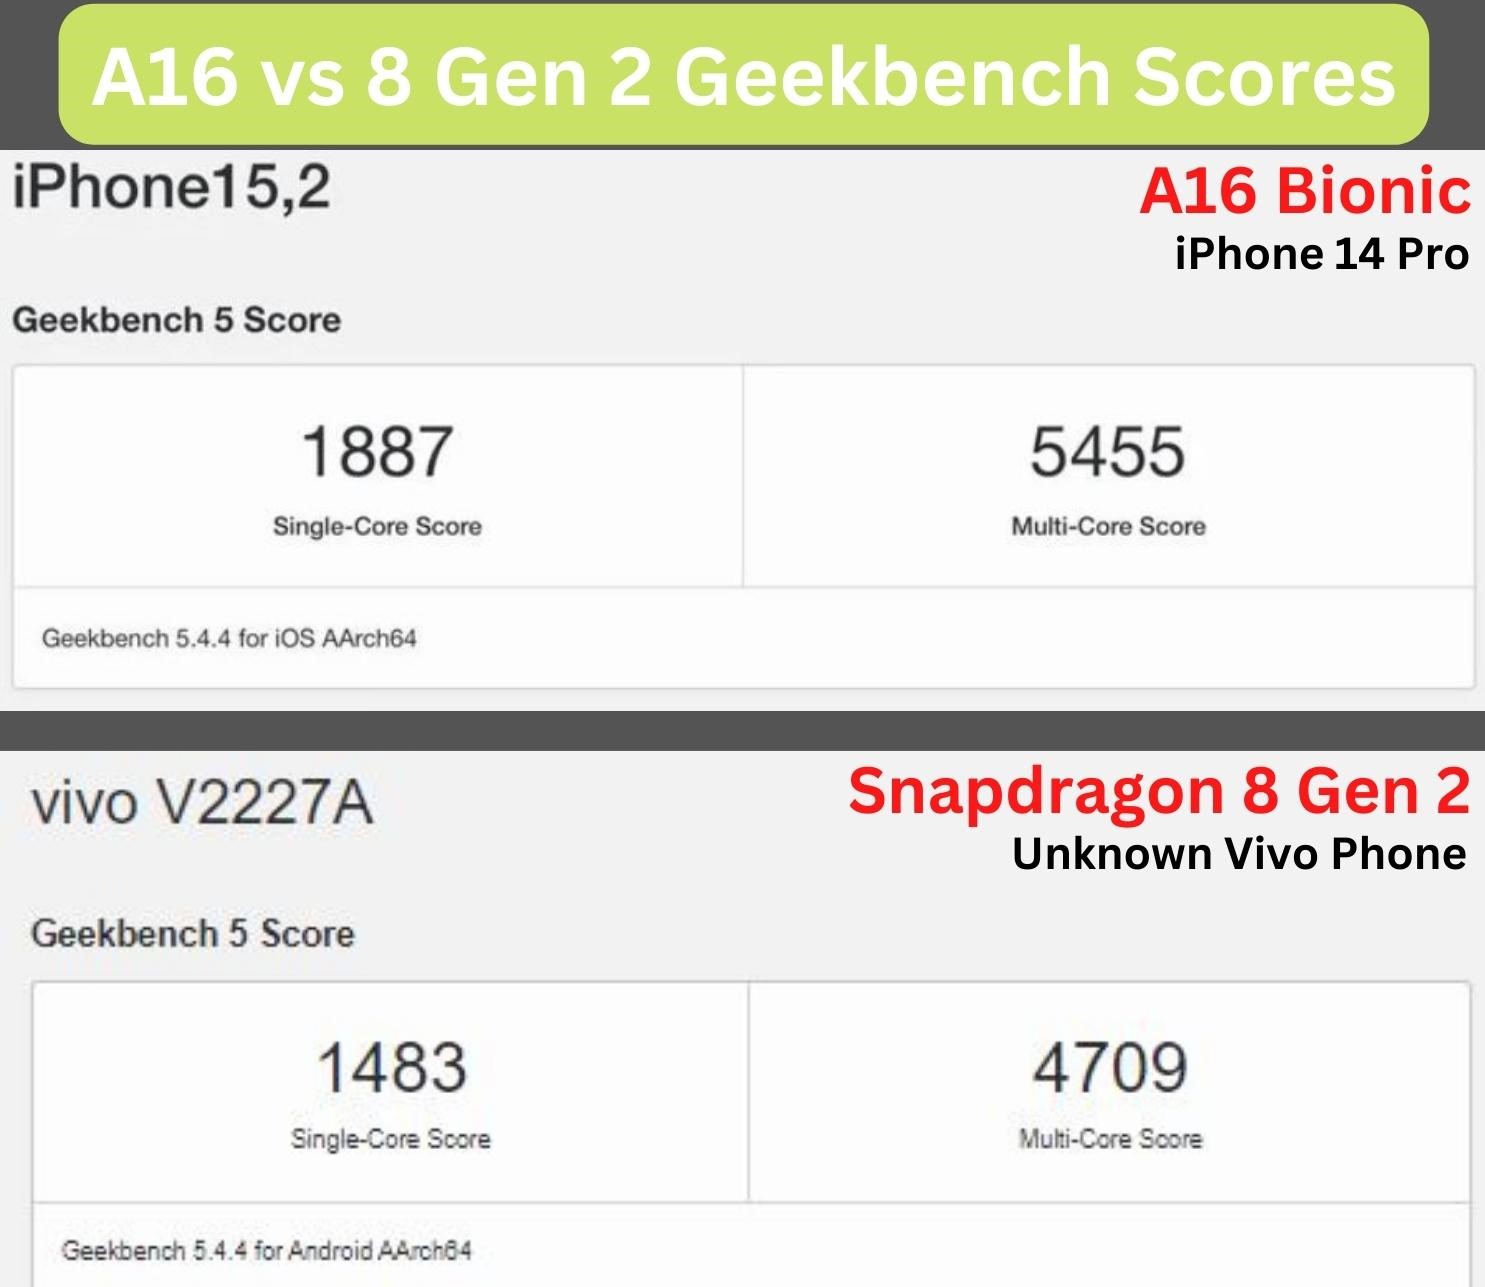 A16 vs 8 Gen 2 Geekbench Scores